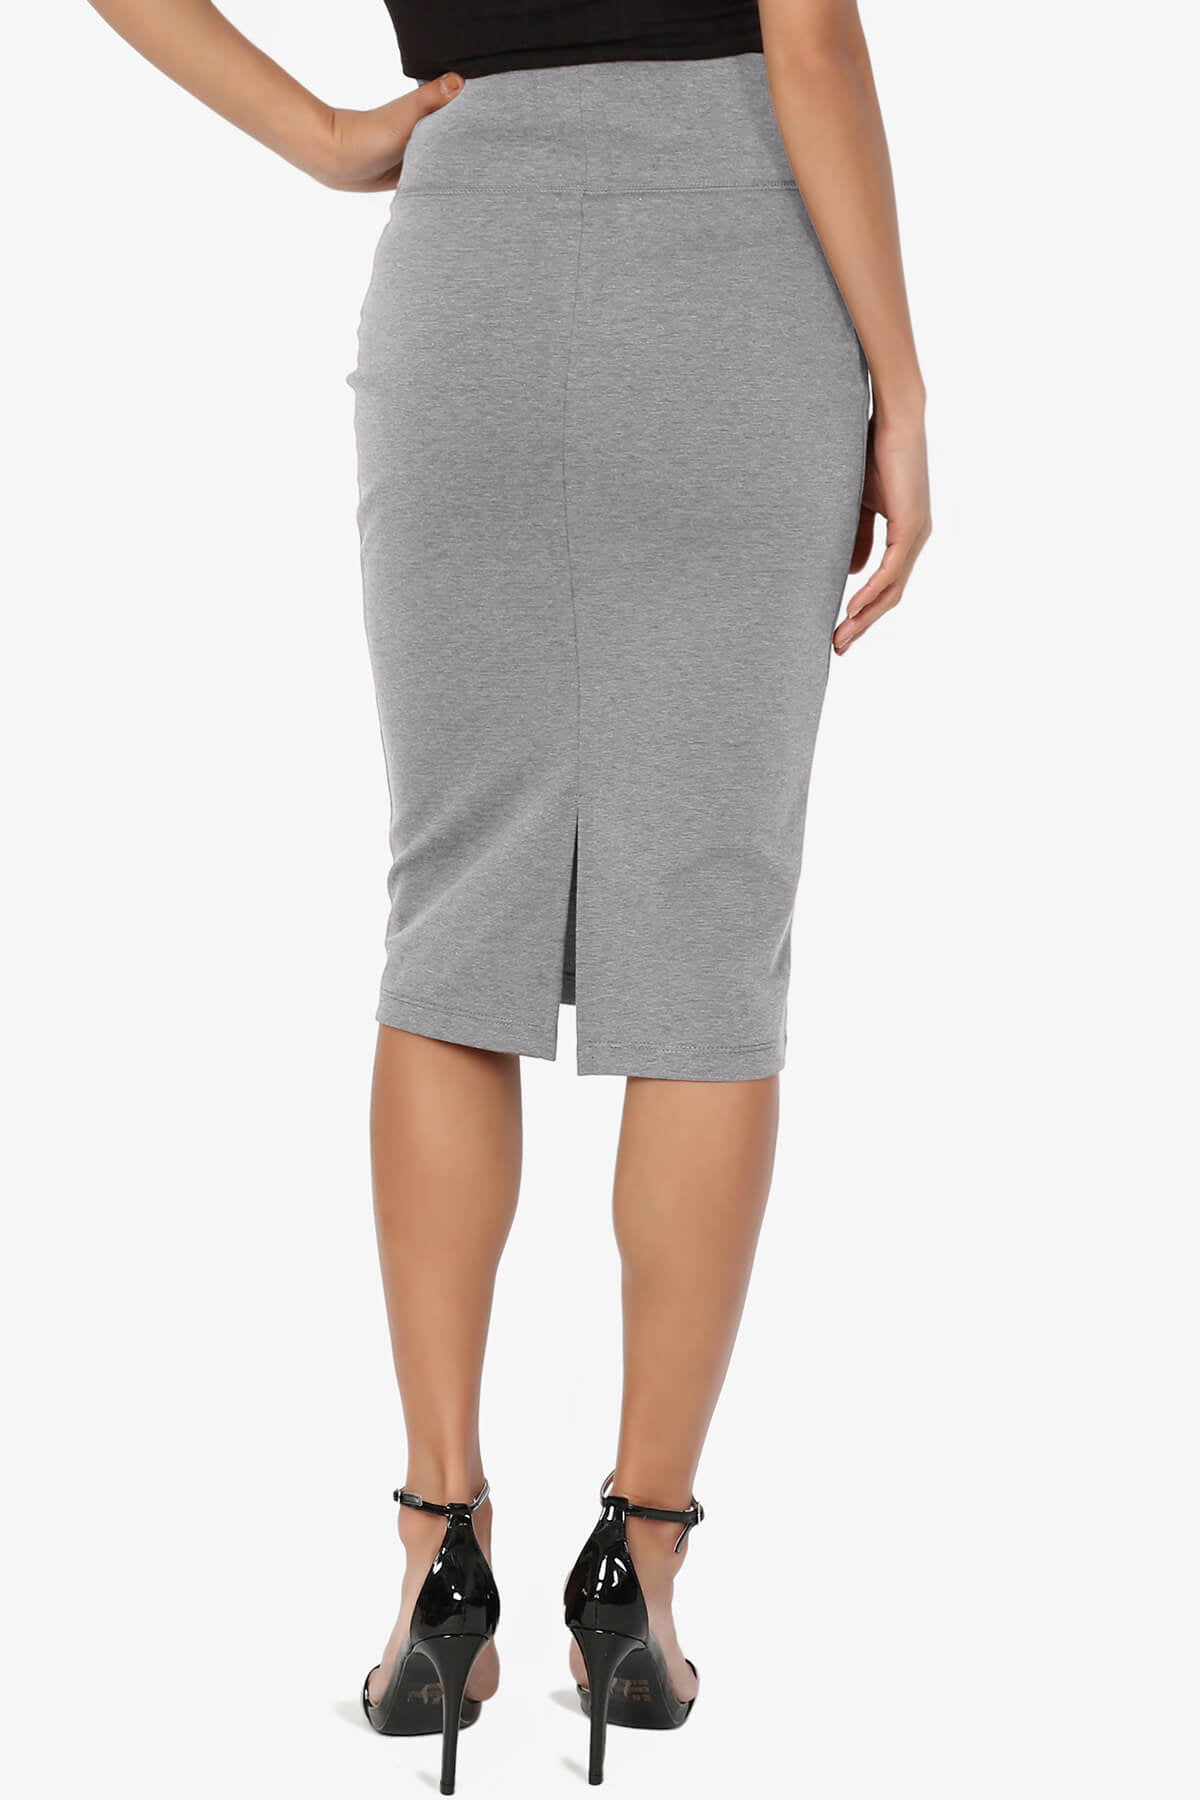 A2Y Women's Basic Solid Ponte Knee Length Slit Techno Span High Waist  Pencil Skirt Mocha S 